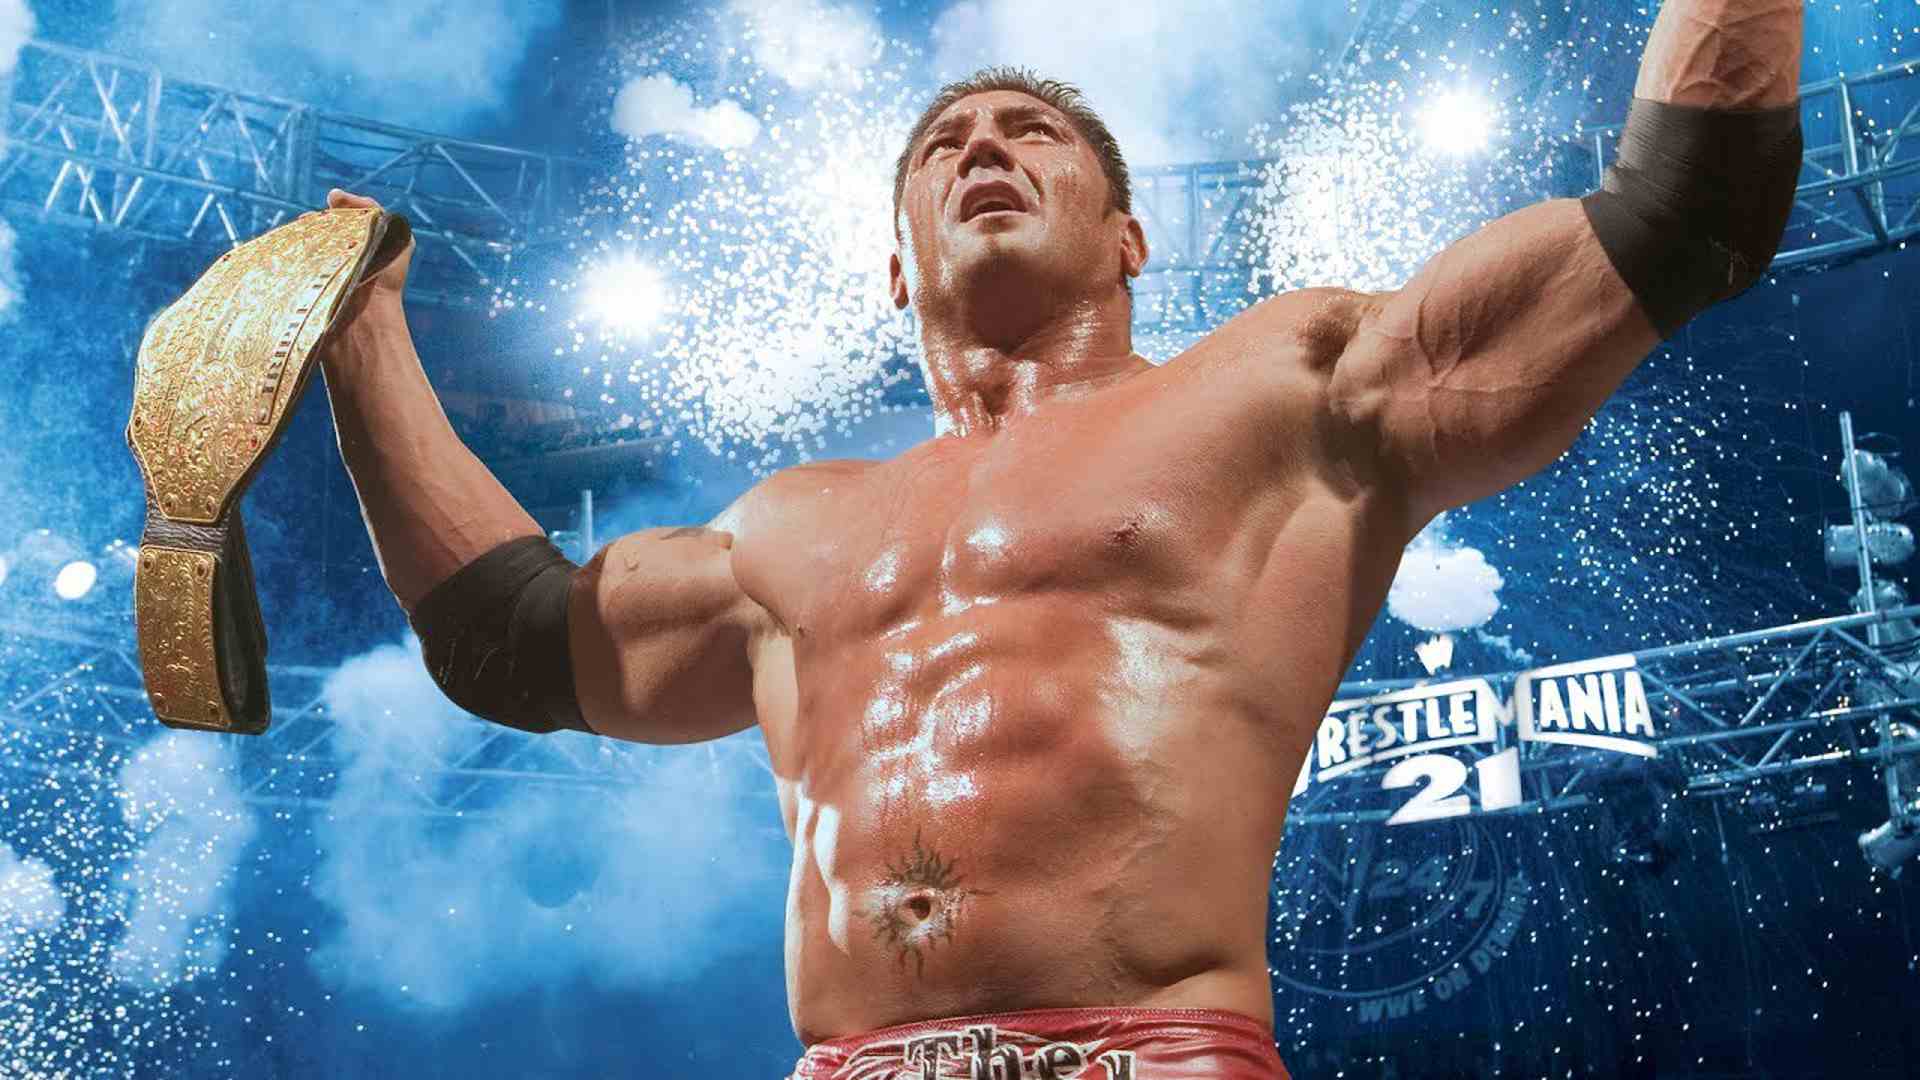 HD wallpaper: David Michael Bautista, Dave Batista, WWE, david bautista,  bodybuilder